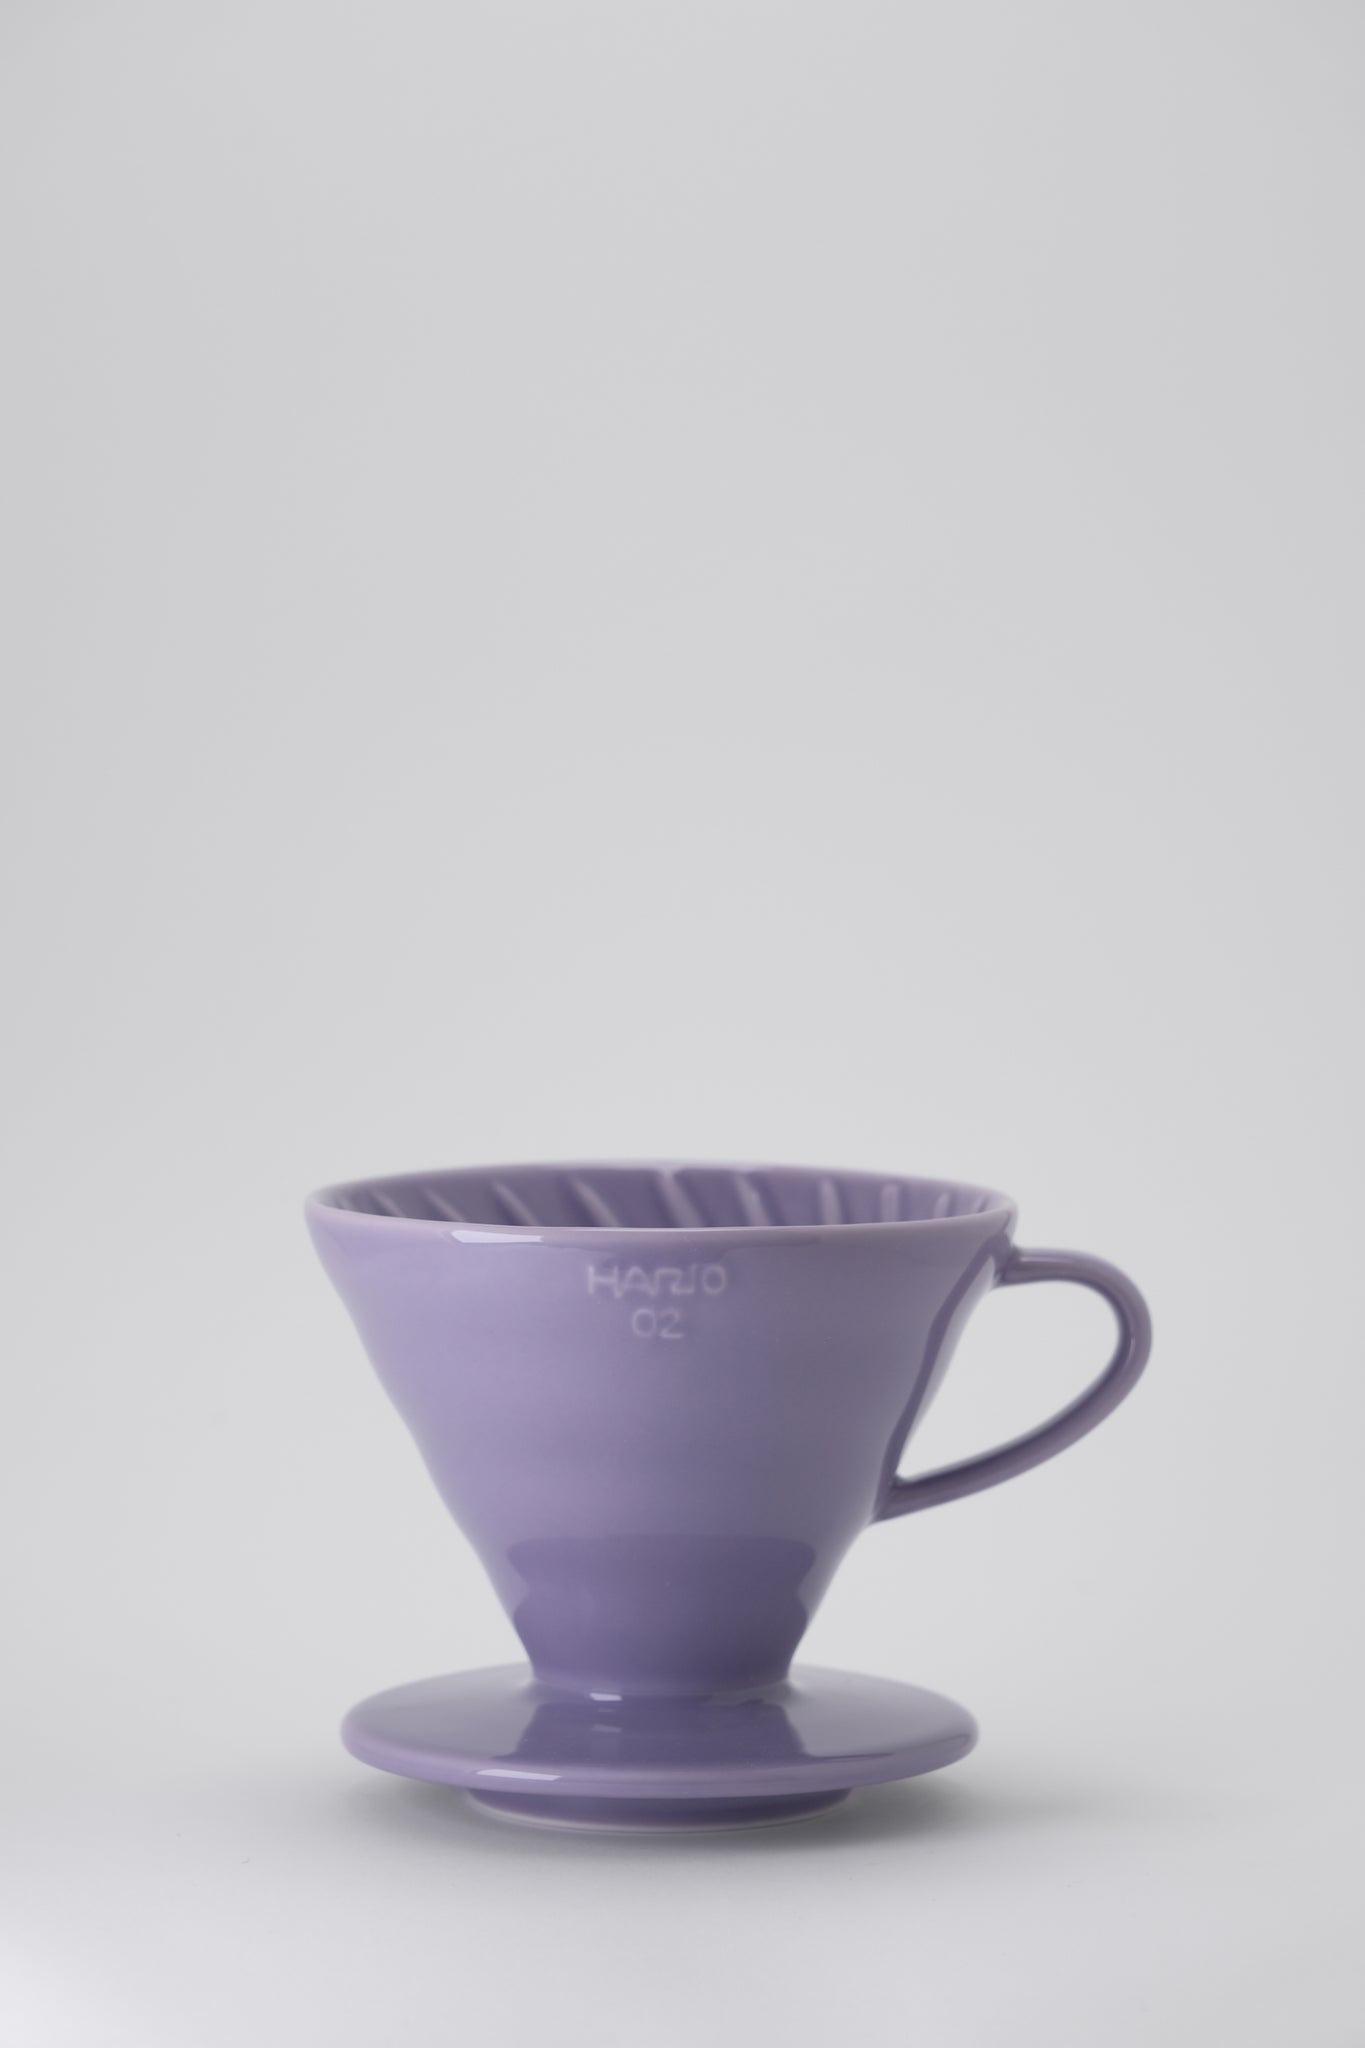 V60 ceramic dripper 02 lilac-Hario-[interior]-[design]-KIOSK48TH